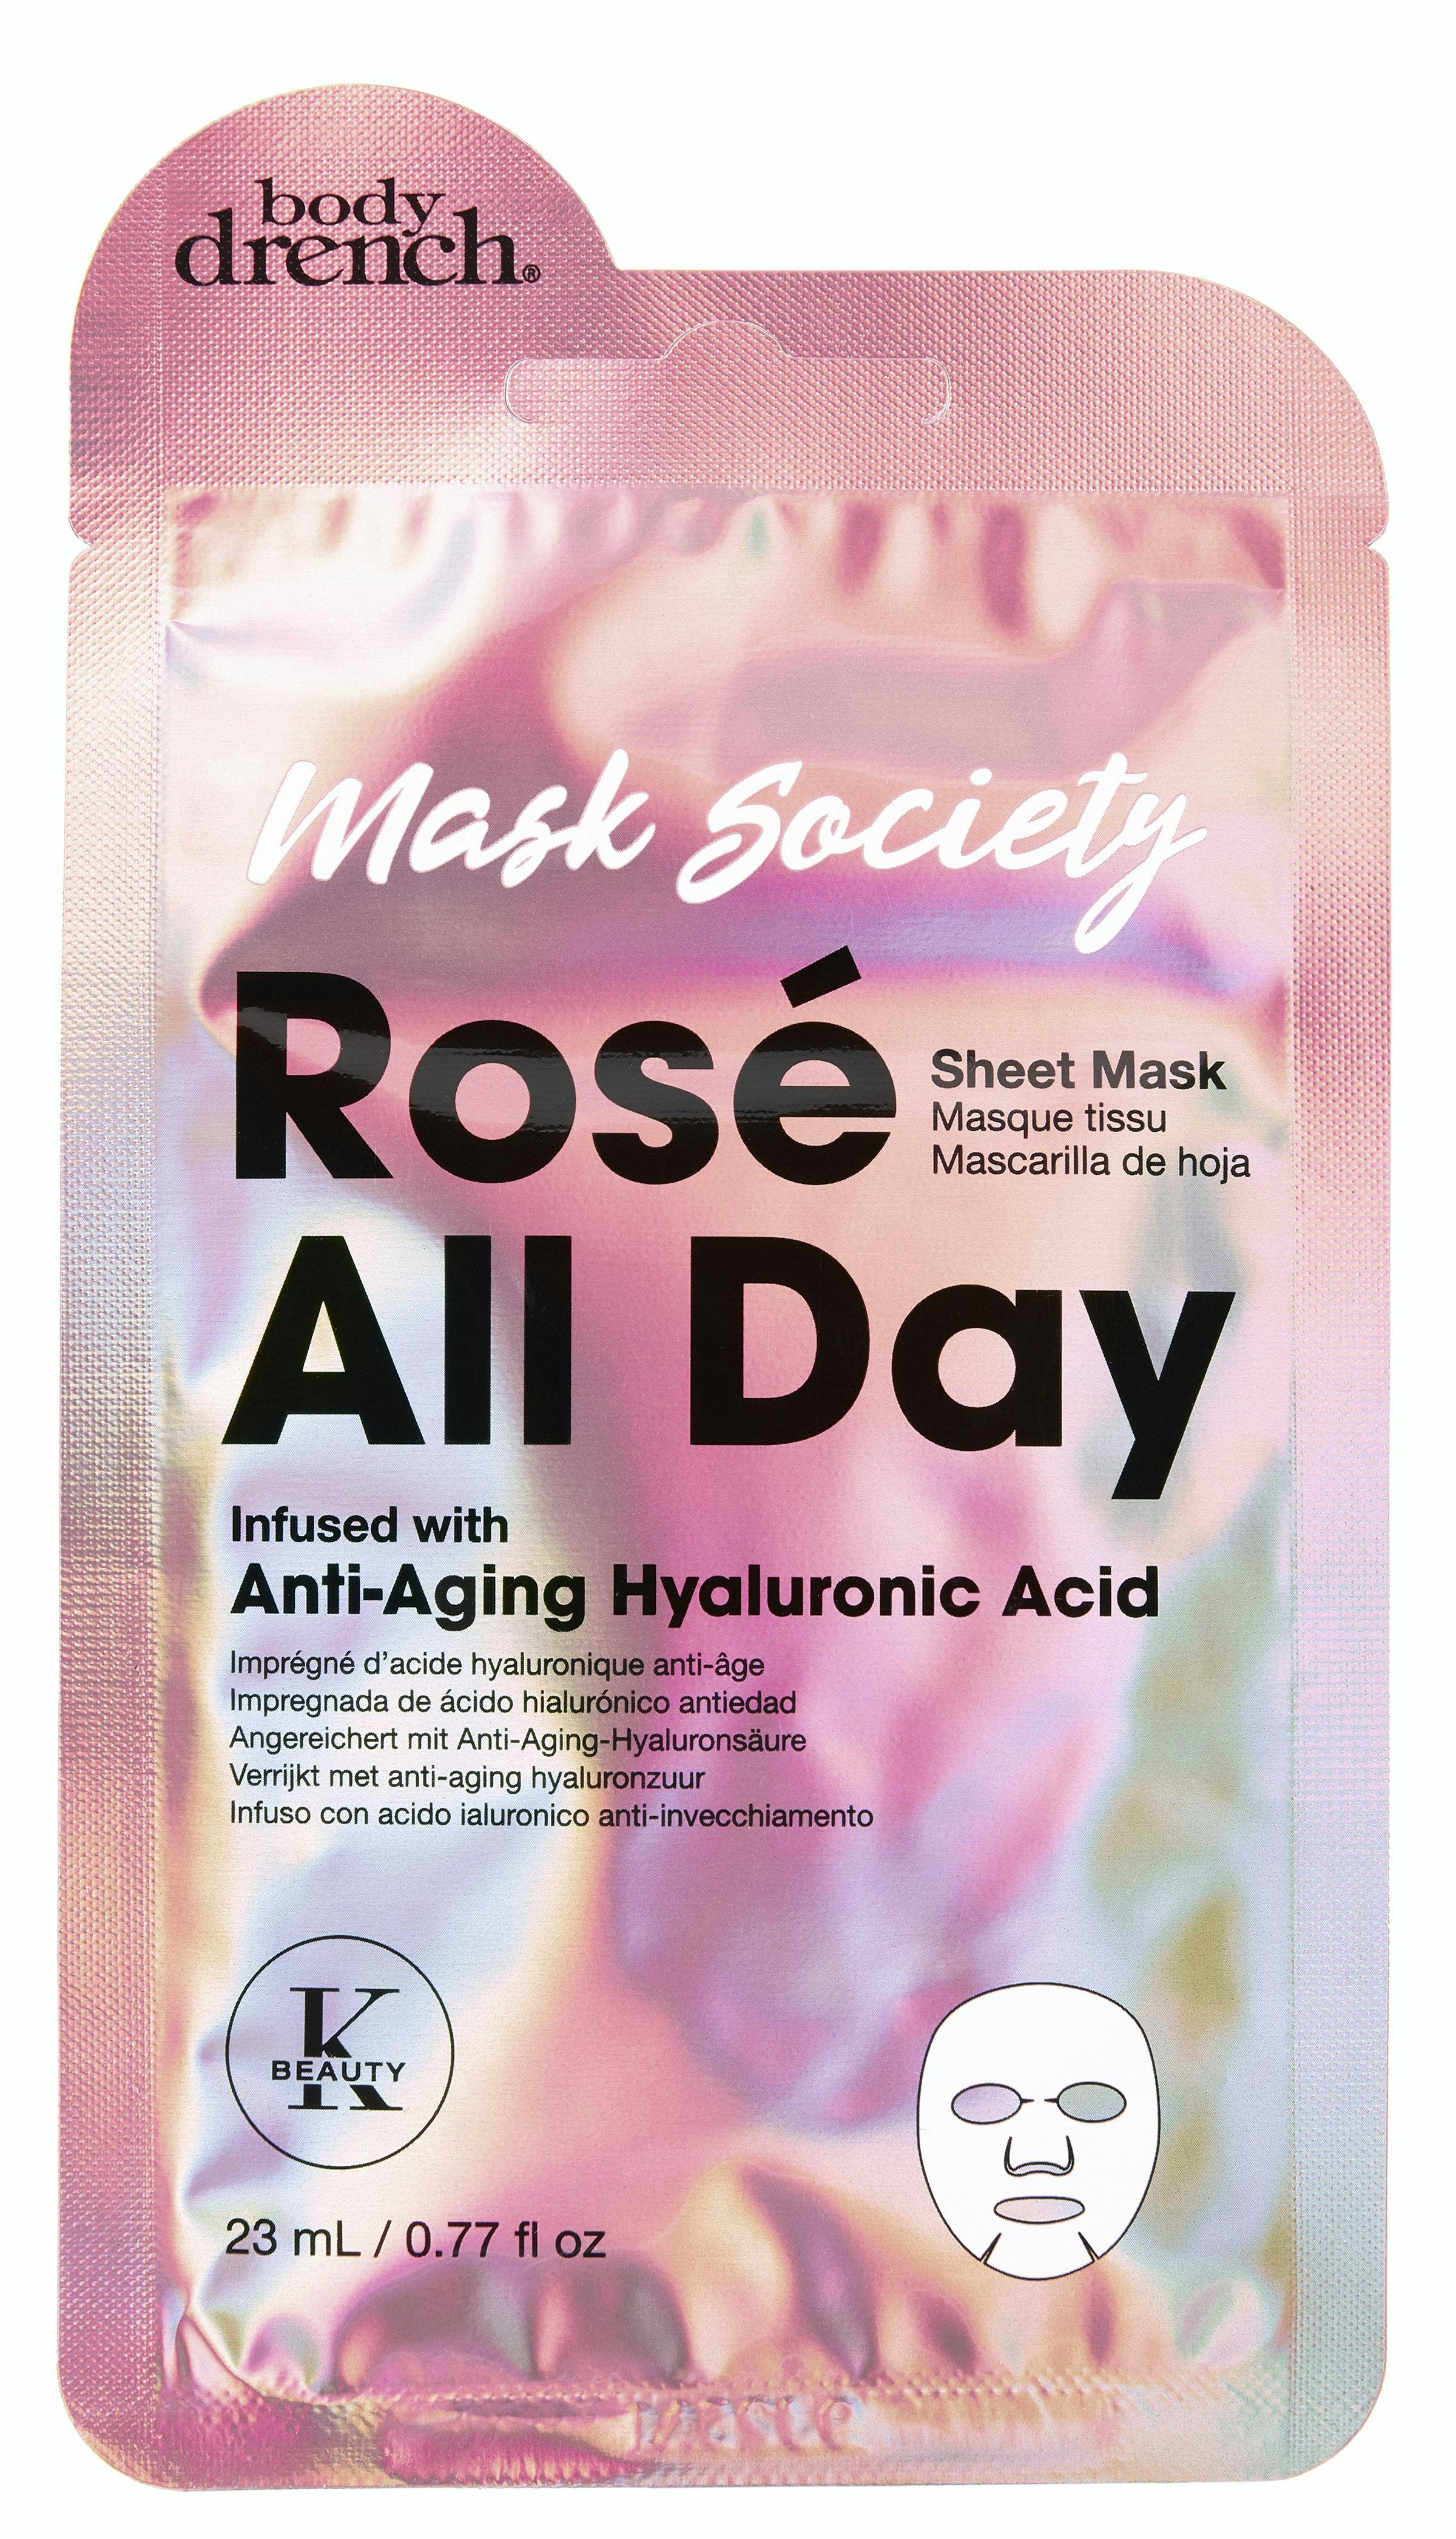 Mask Society RoseAllDaySheet Mask 23ml